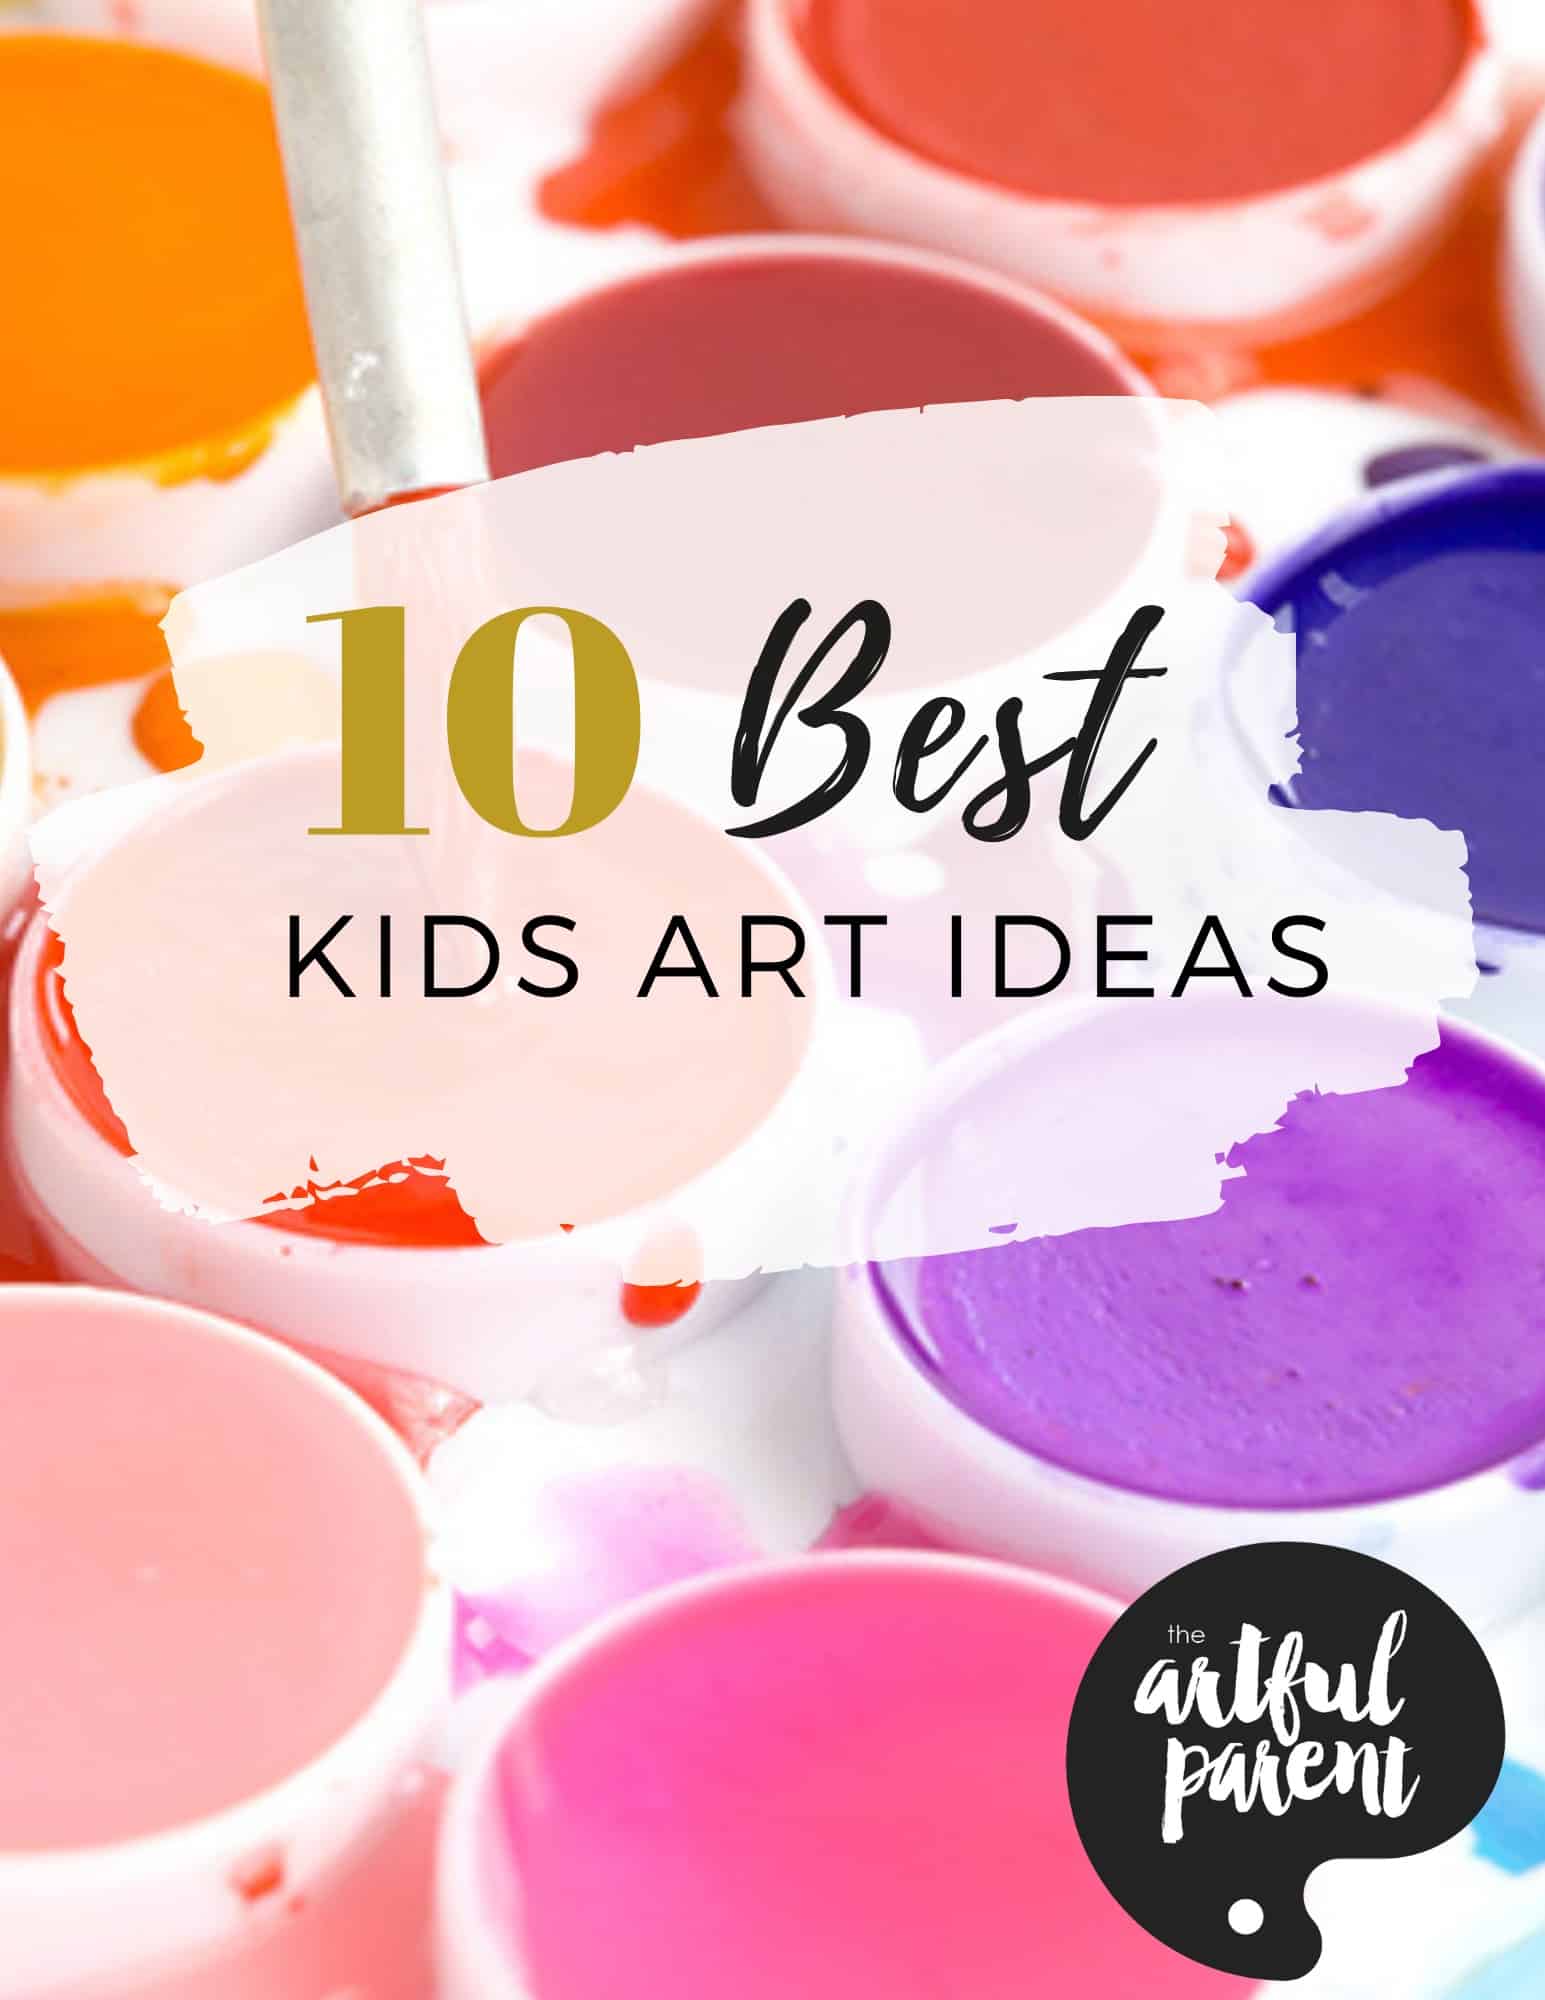 10 Best Kids Art Ideas